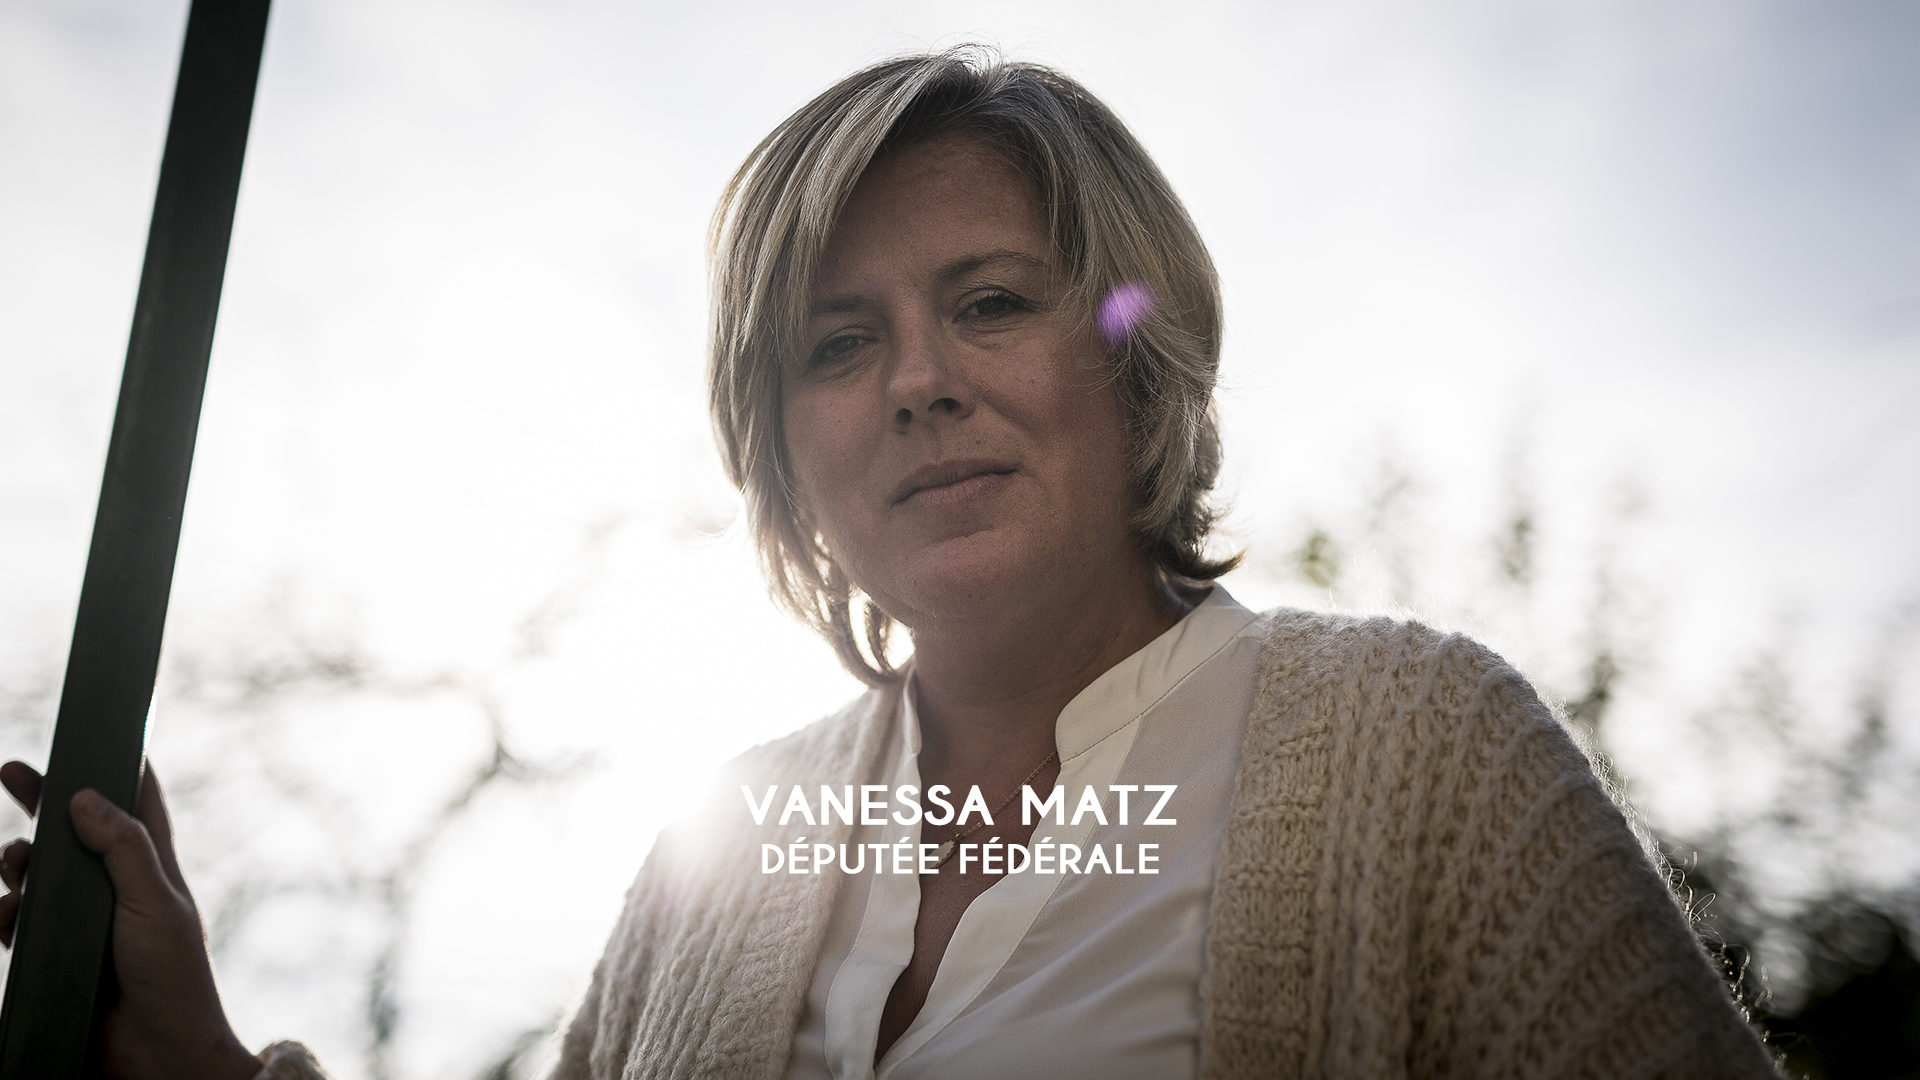 Vanessa Matz